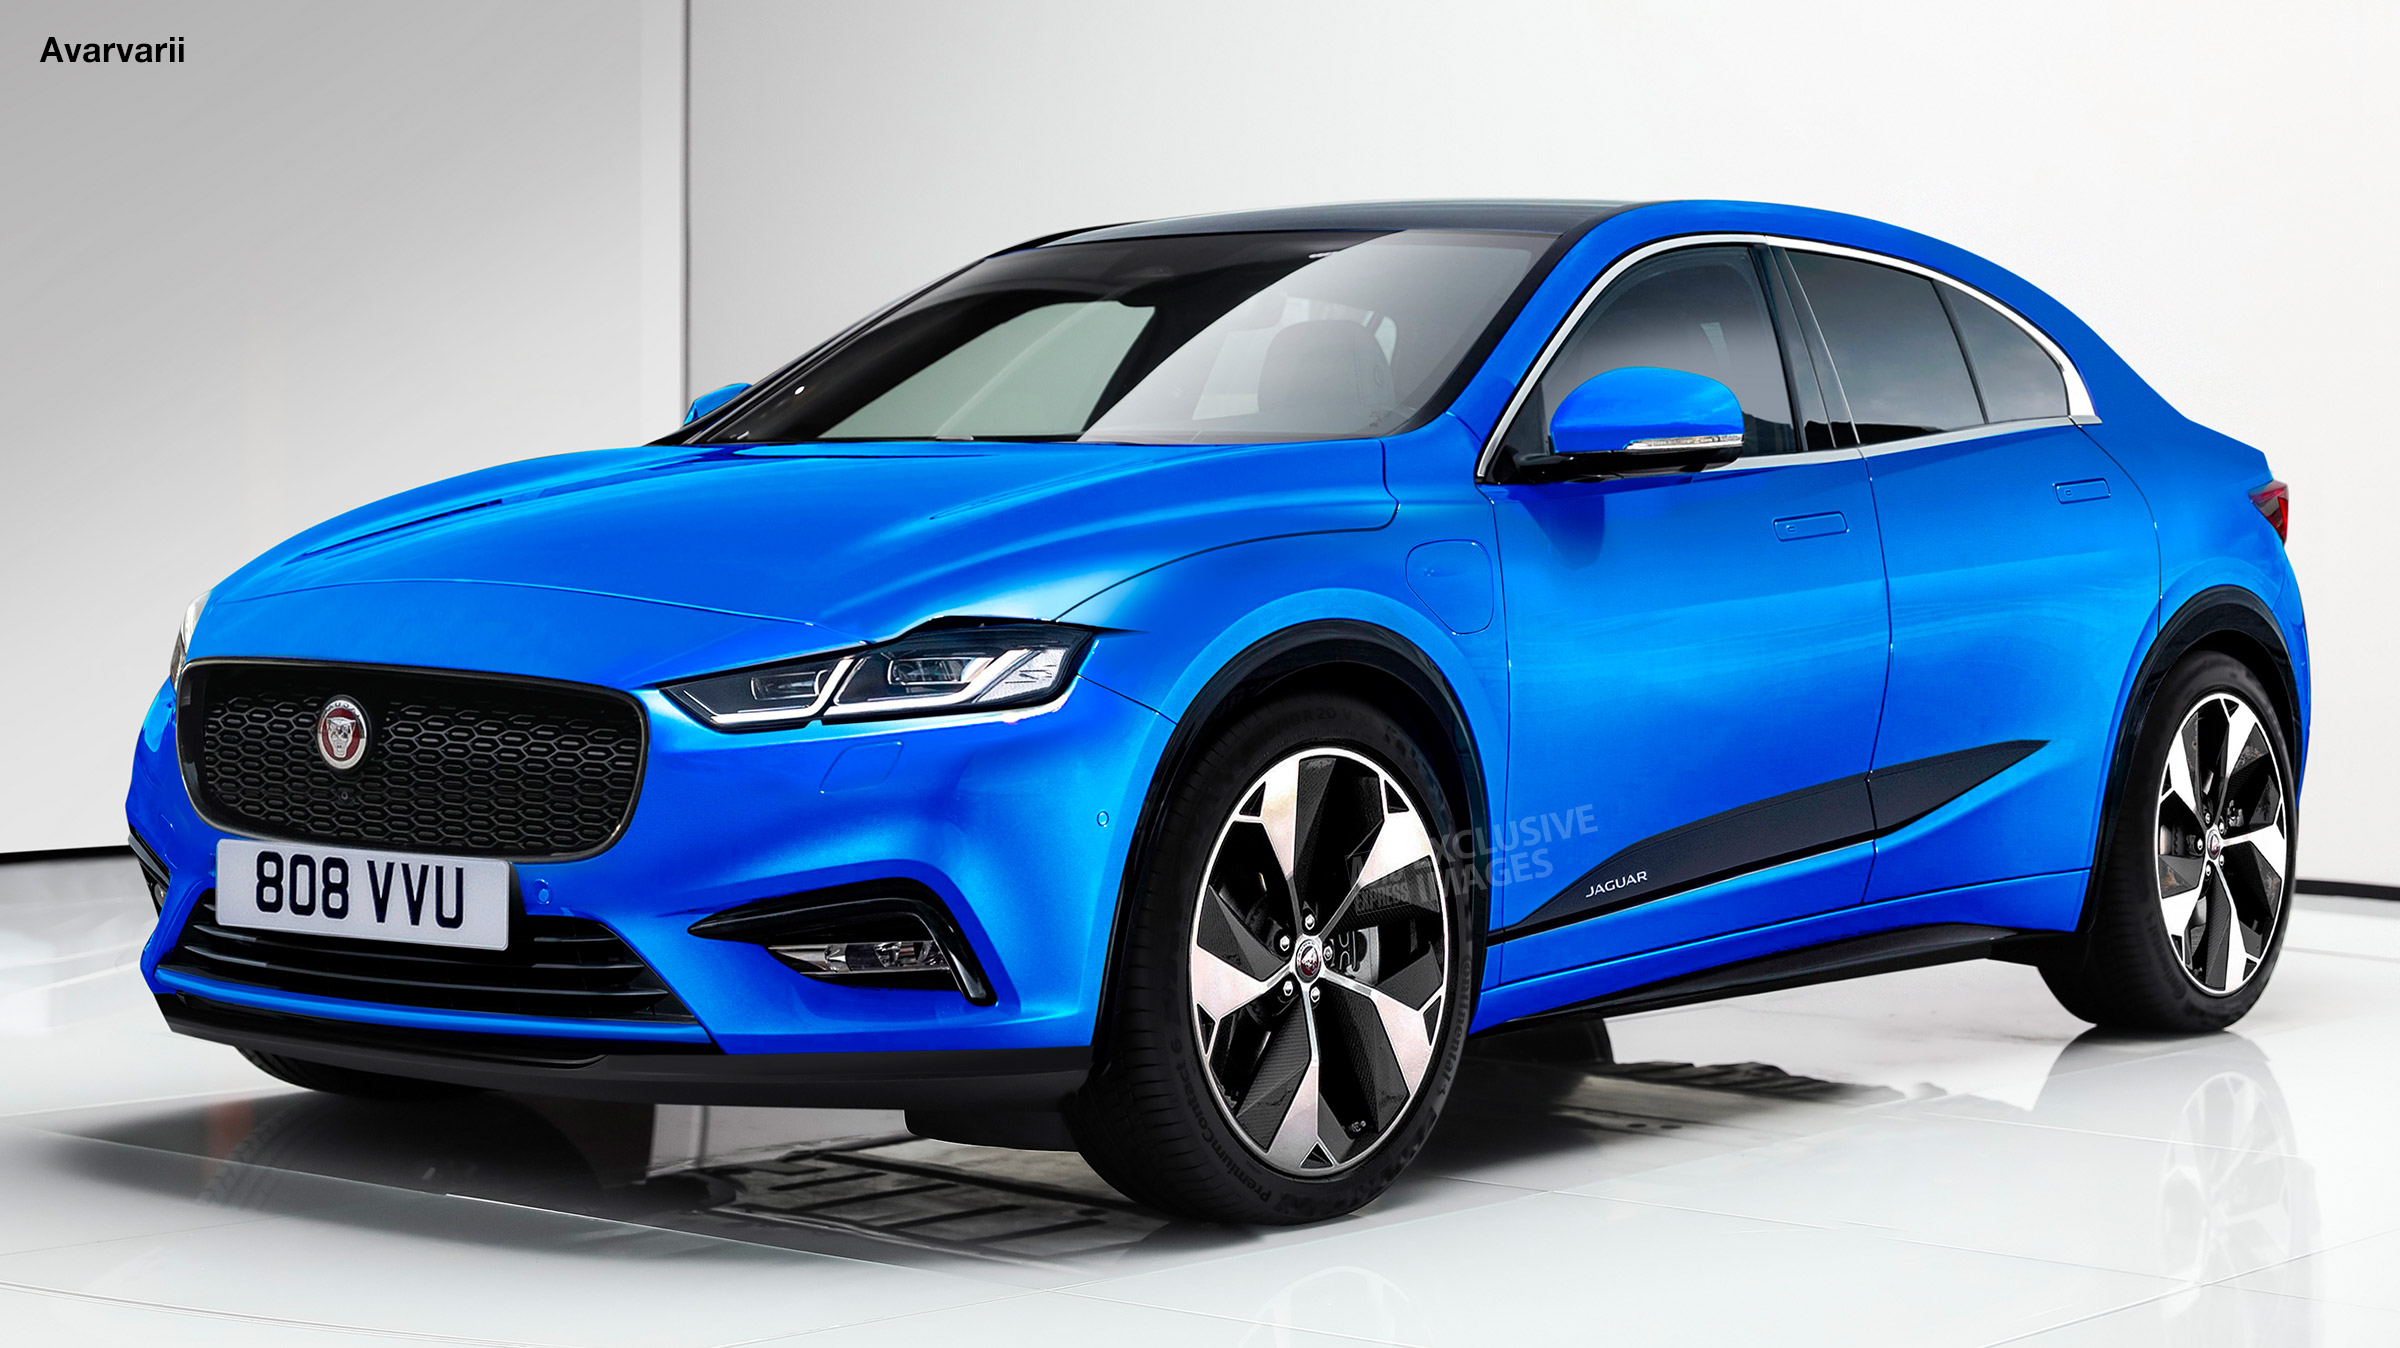 New baby electric Jaguar to take on Tesla Model 3 Auto Express